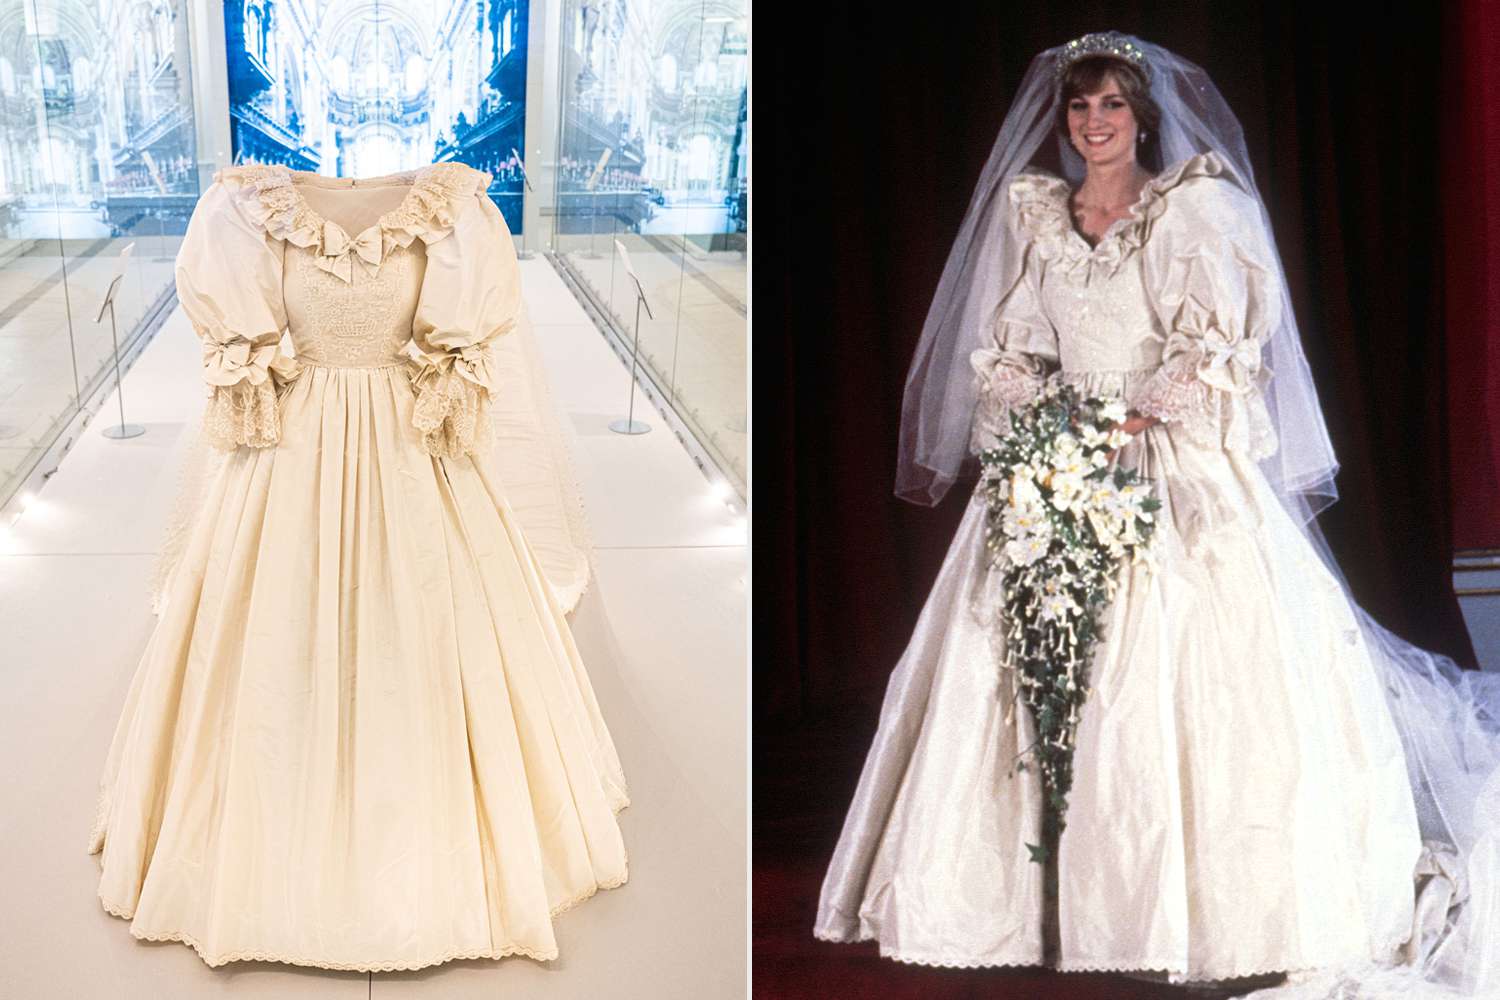 The wedding dress of Diana, Princess of Wales